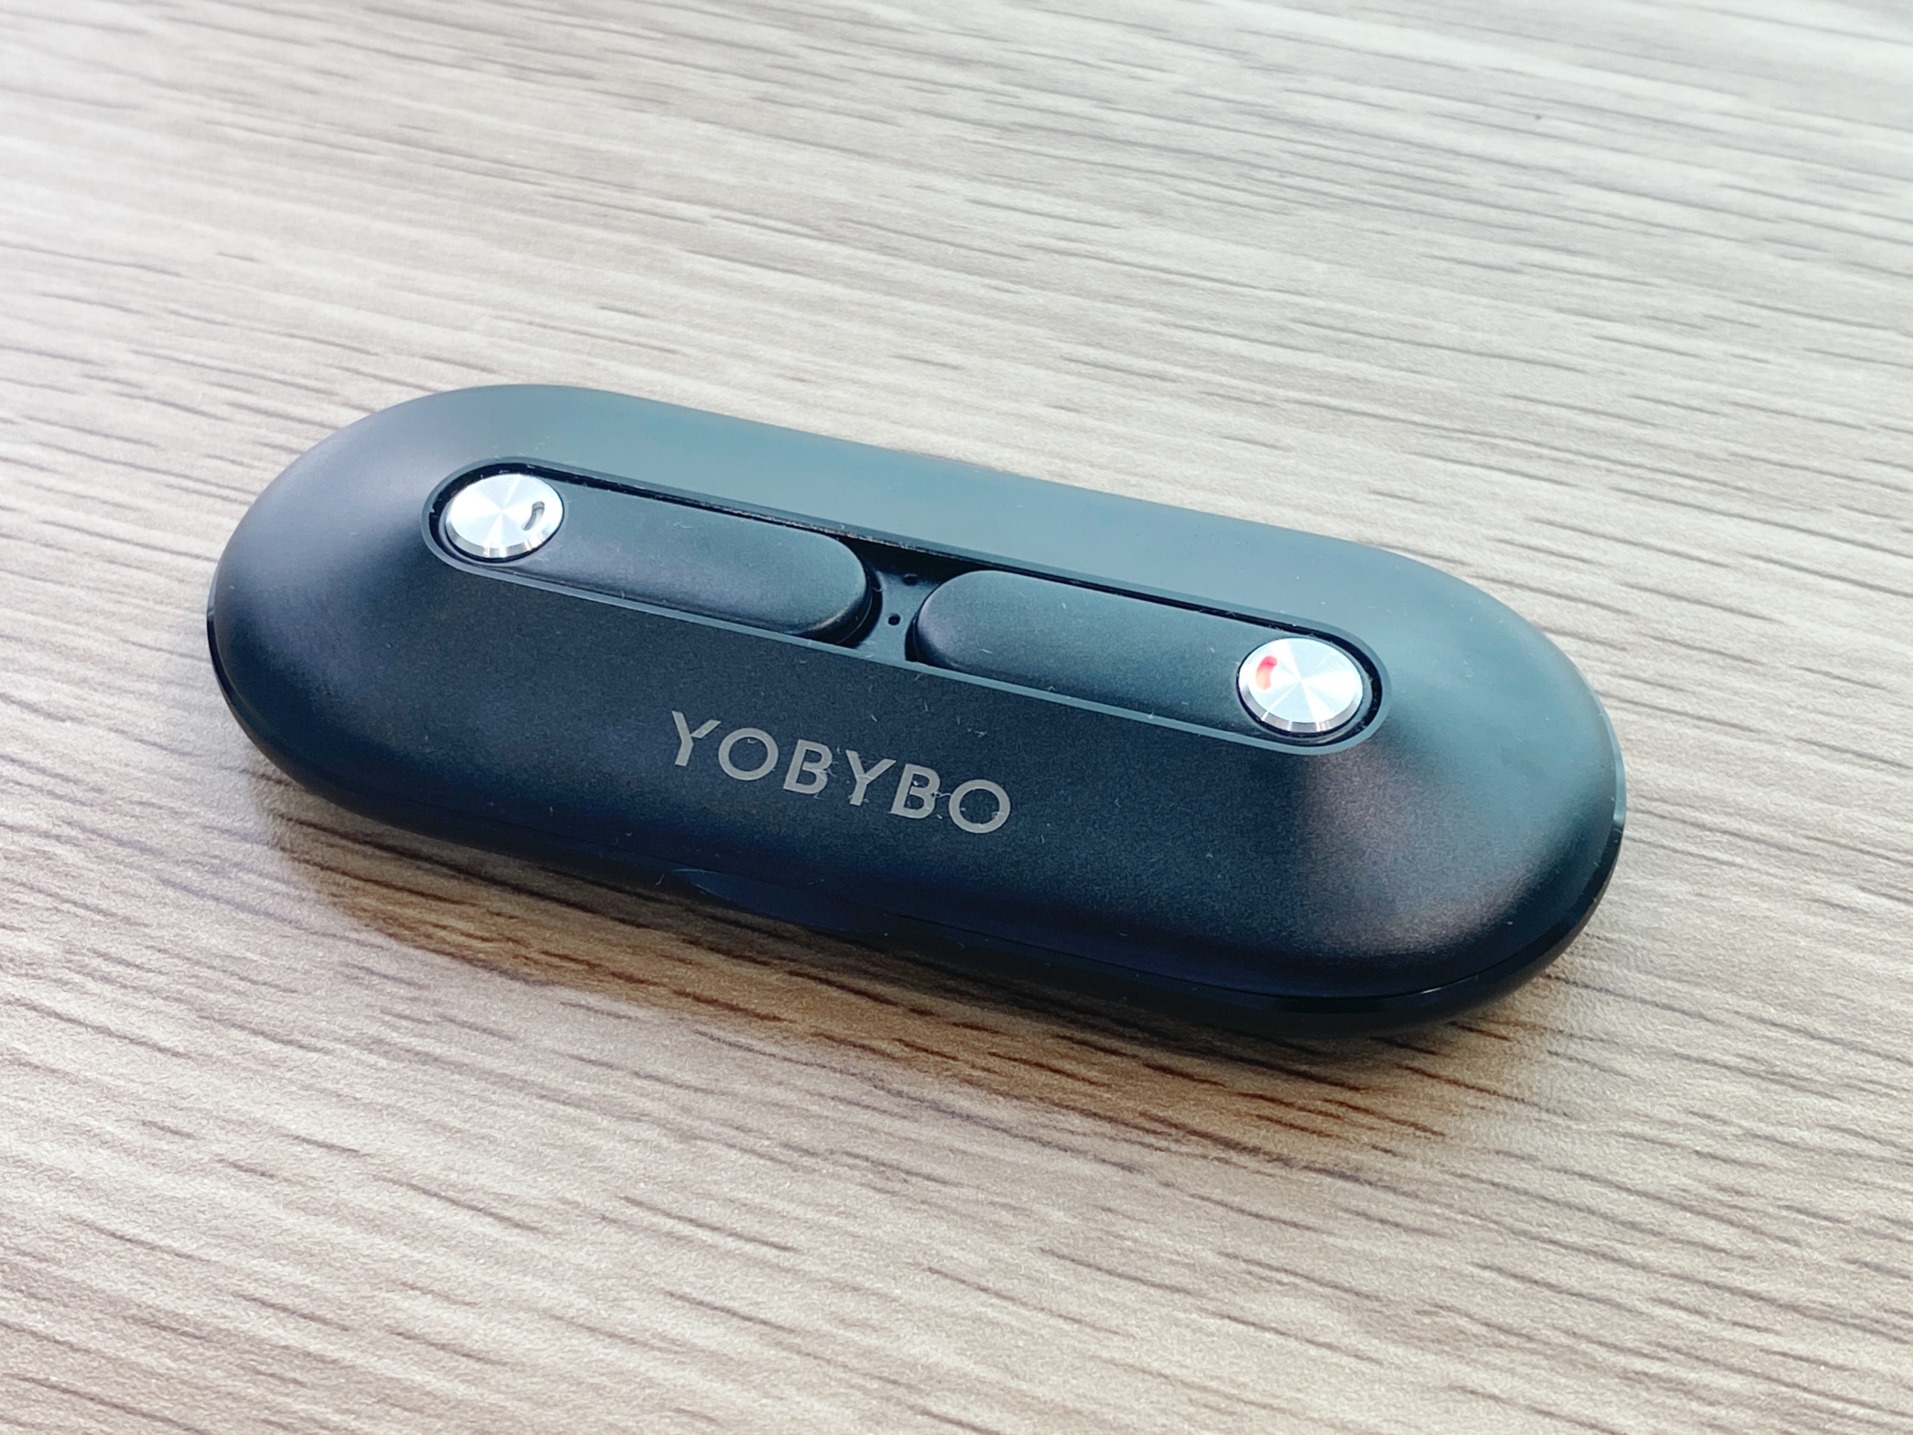 YOBYBO CARD20レビュー】「世界最薄」の完全ワイヤレスイヤホンは装着 